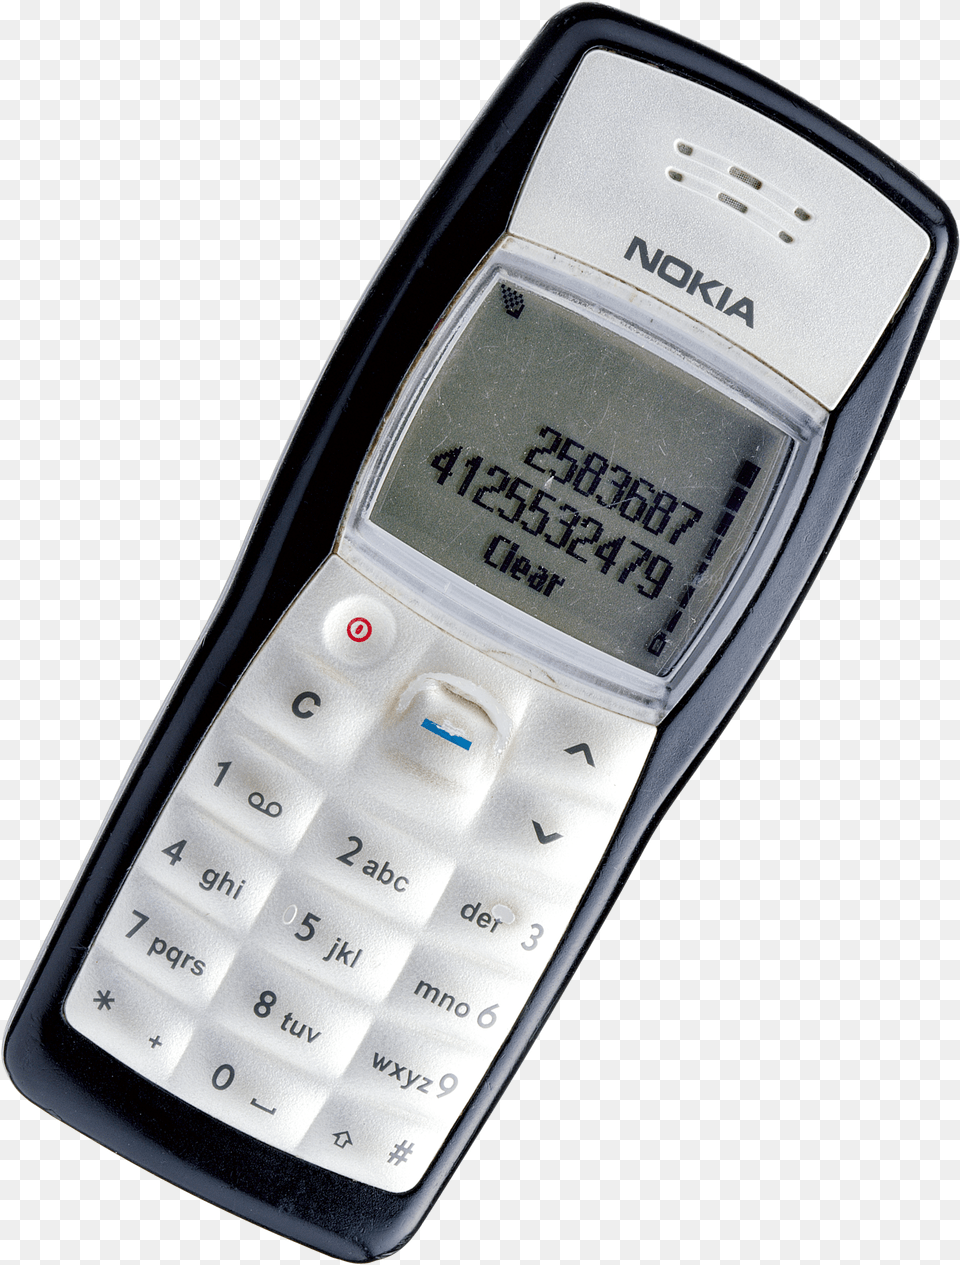 Nokia 1100 En, Electronics, Mobile Phone, Phone, Texting Png